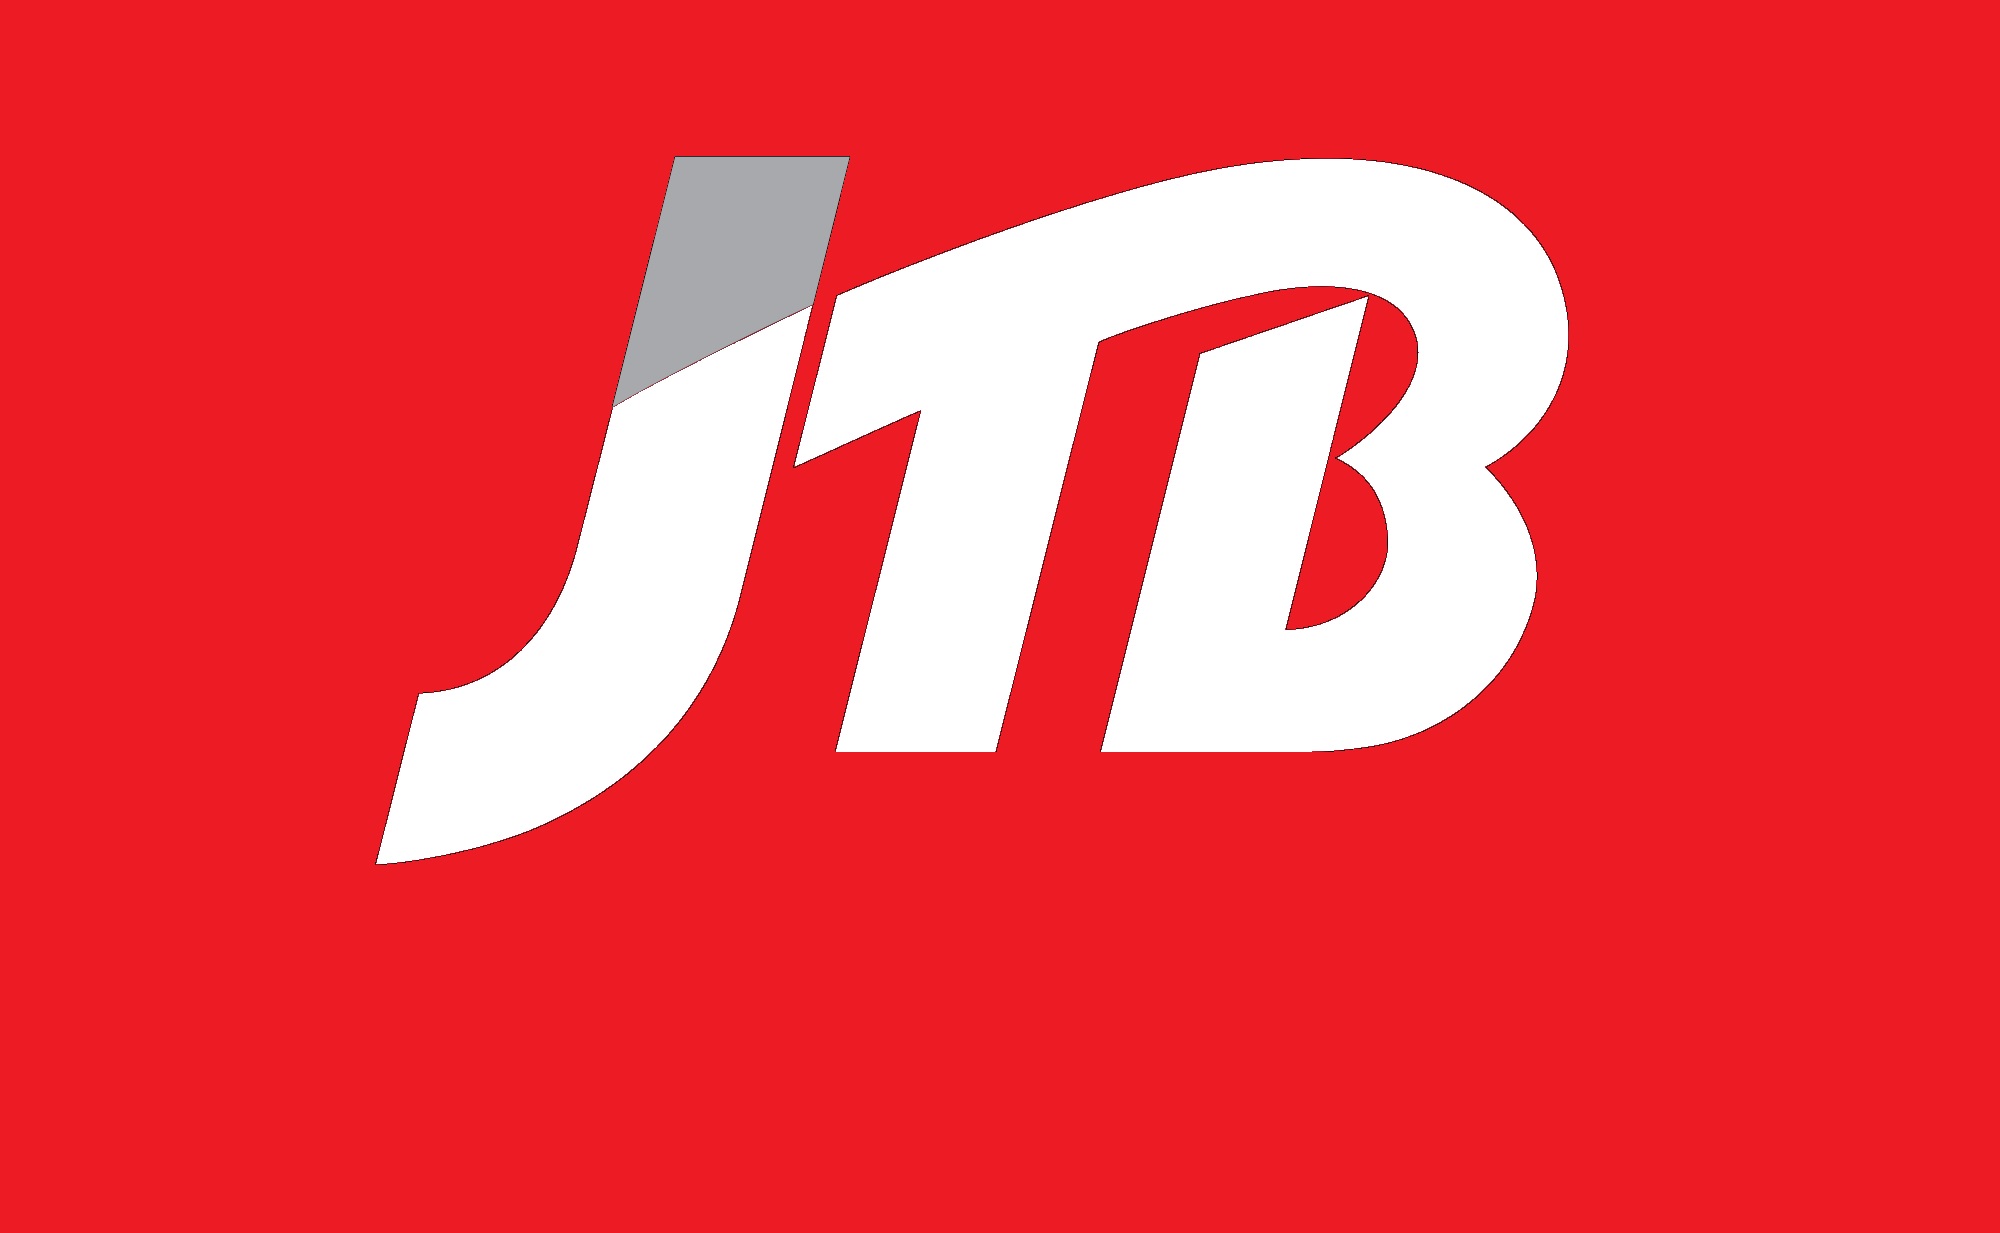 jtb travel network company